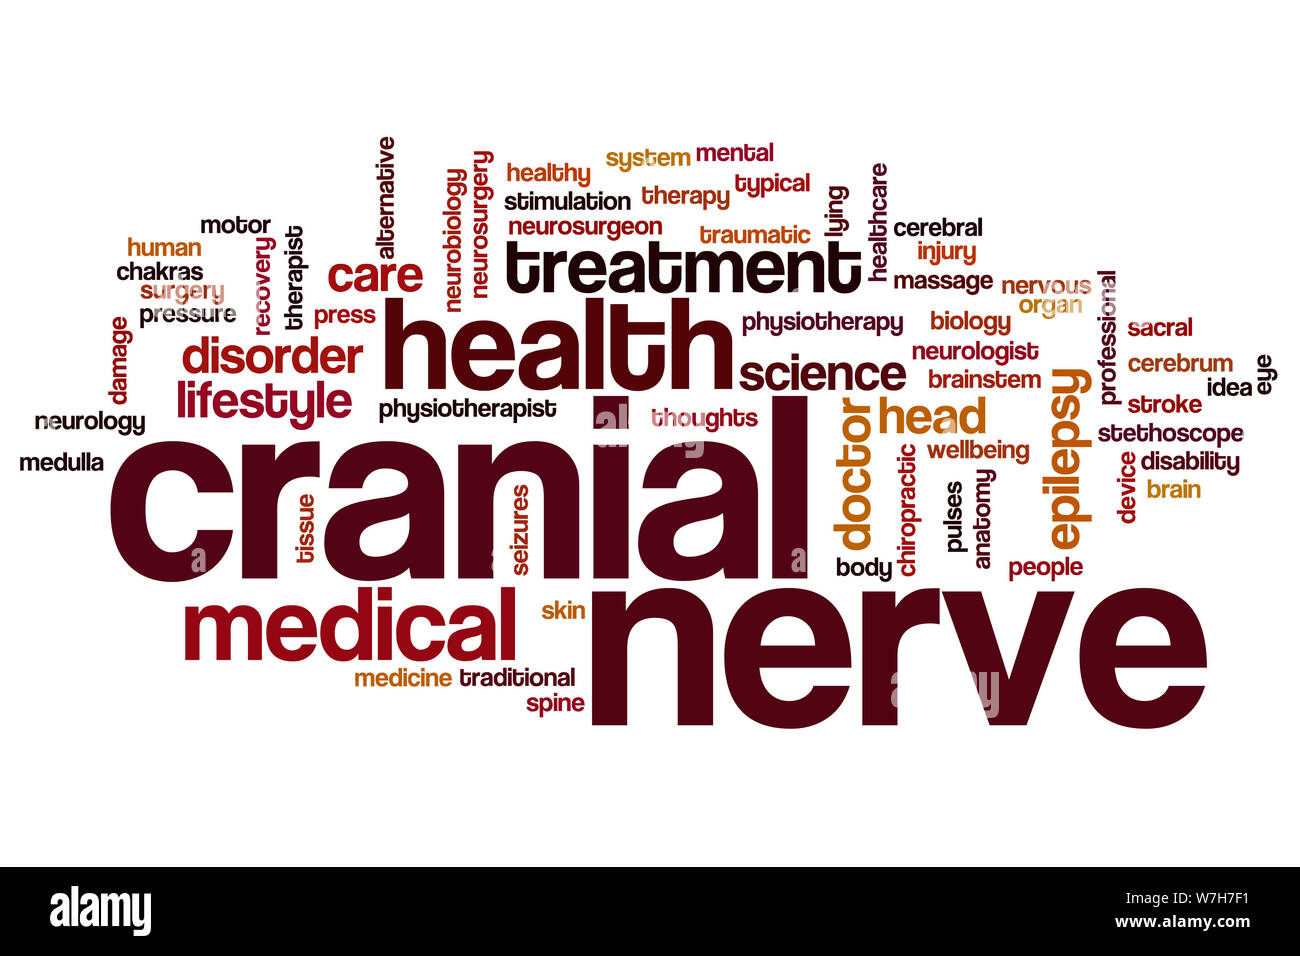 Cranial nerve word cloud concept Stock Photo